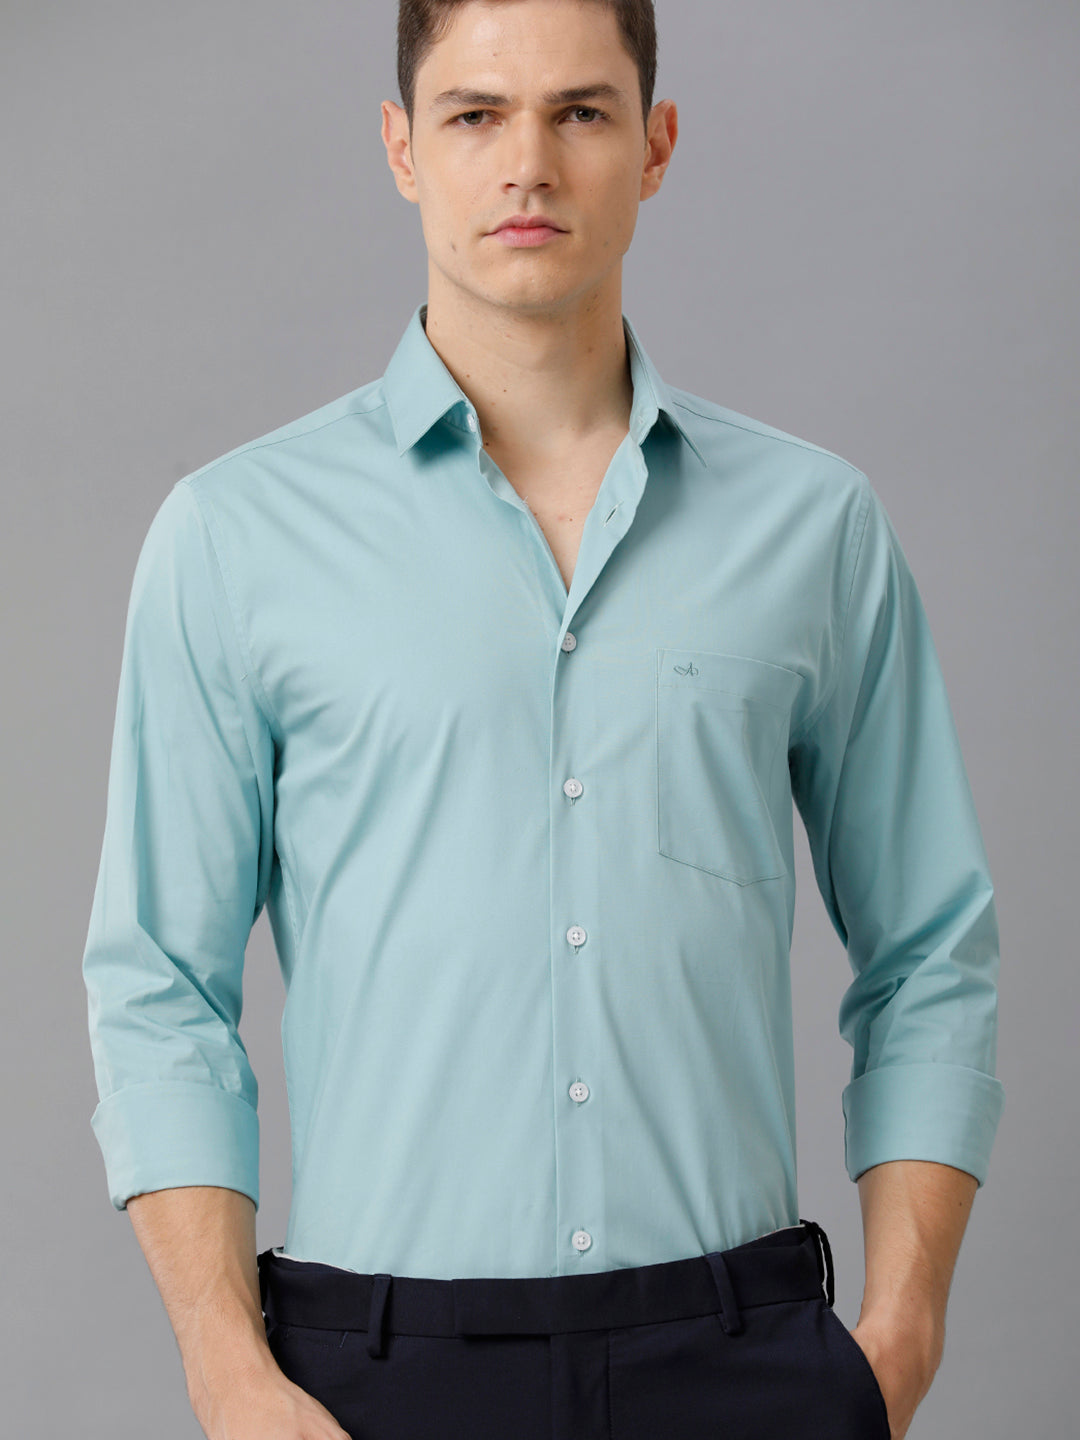 Aldeno Mens Slim Fit Solid Teal Formal Cotton Stretch Shirt (CASON)